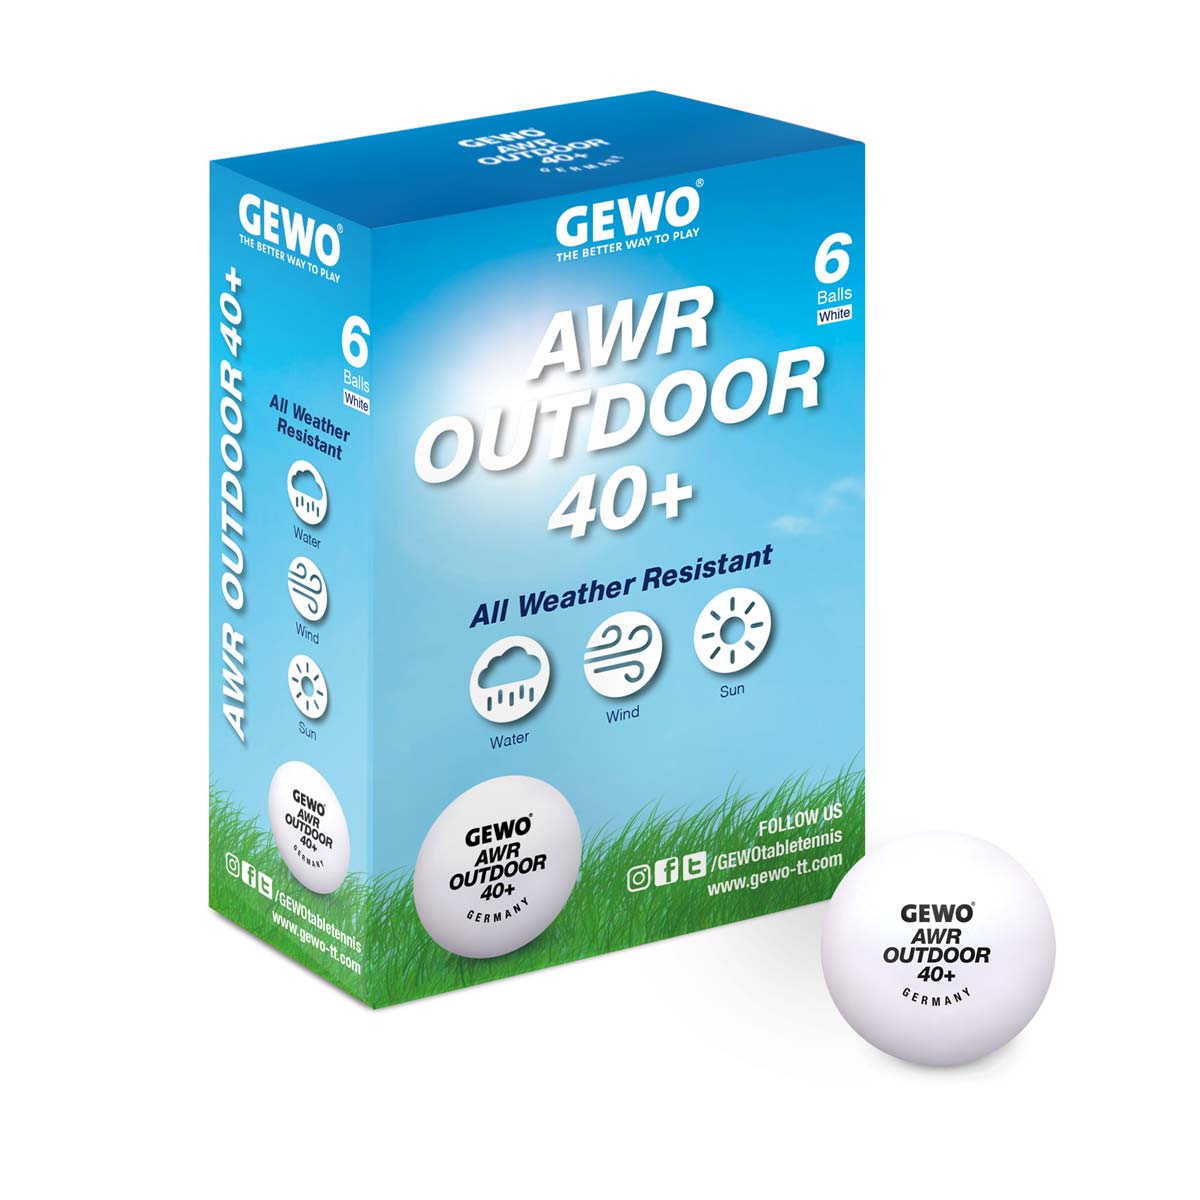 GEWO Ball AWR Outdoor 40+ 6er white